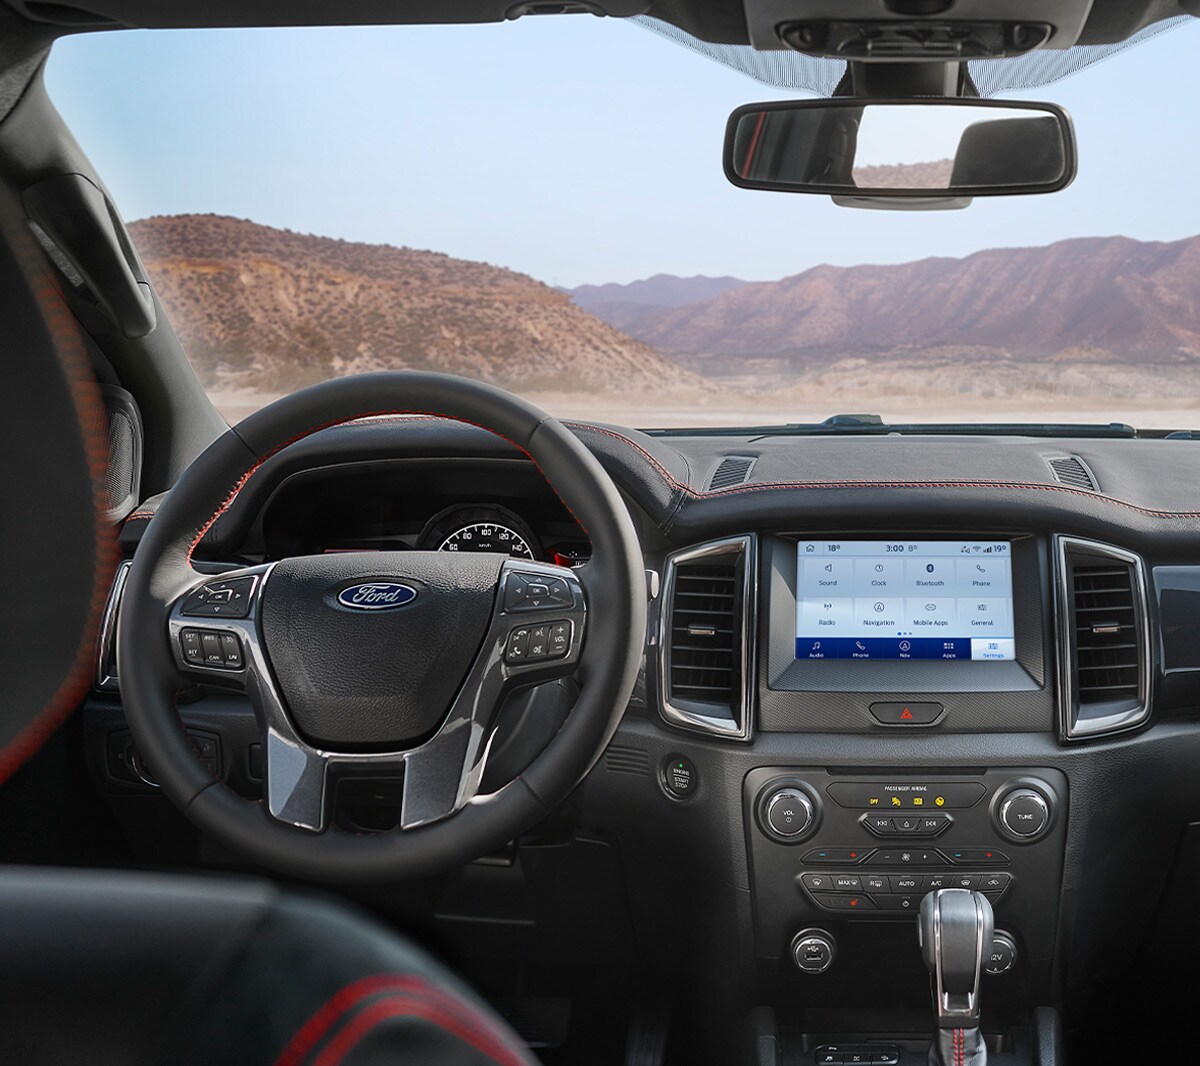 Ford Ranger Stormtrak interior view